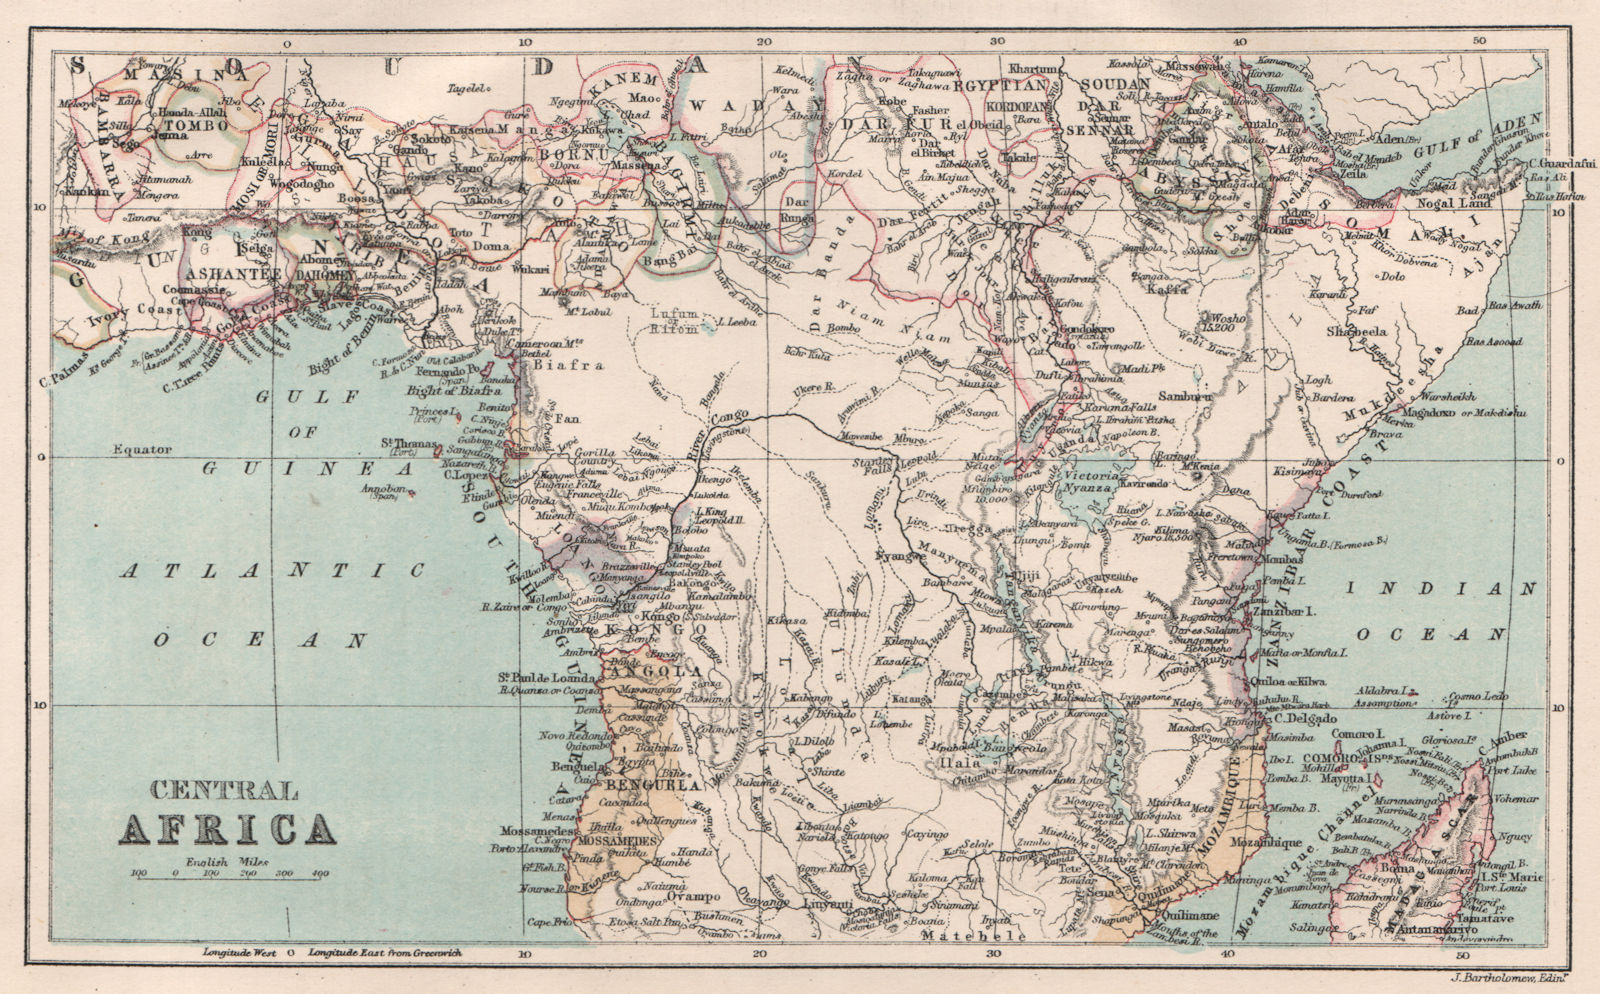 Central Africa. Congo Zambia Tanzania Kenya Mozambique. BARTHOLOMEW 1886 map